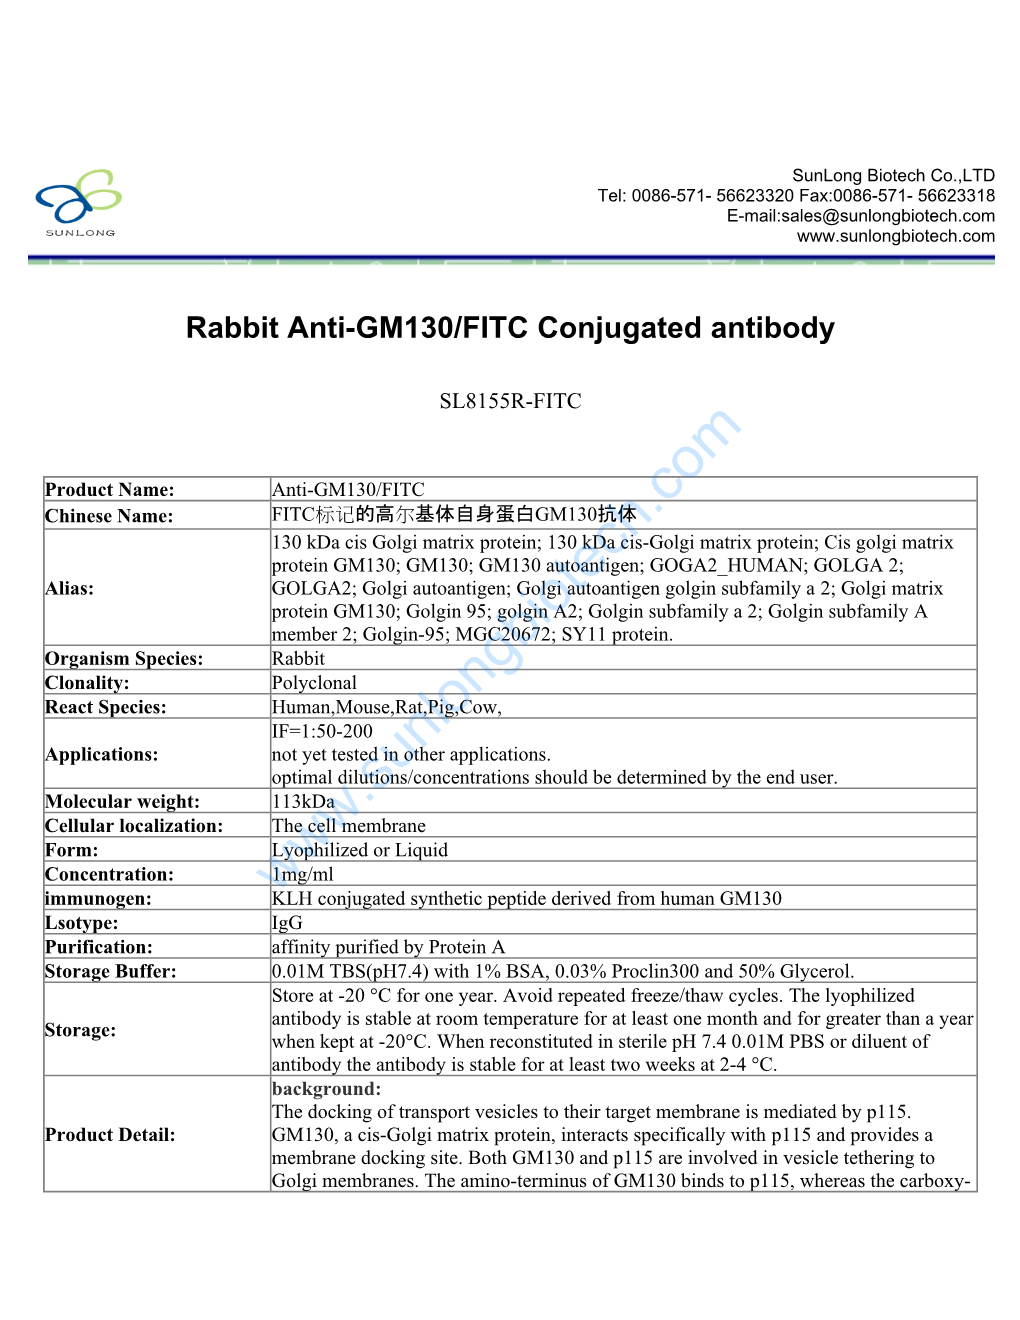 Rabbit Anti-GM130/FITC Conjugated Antibody